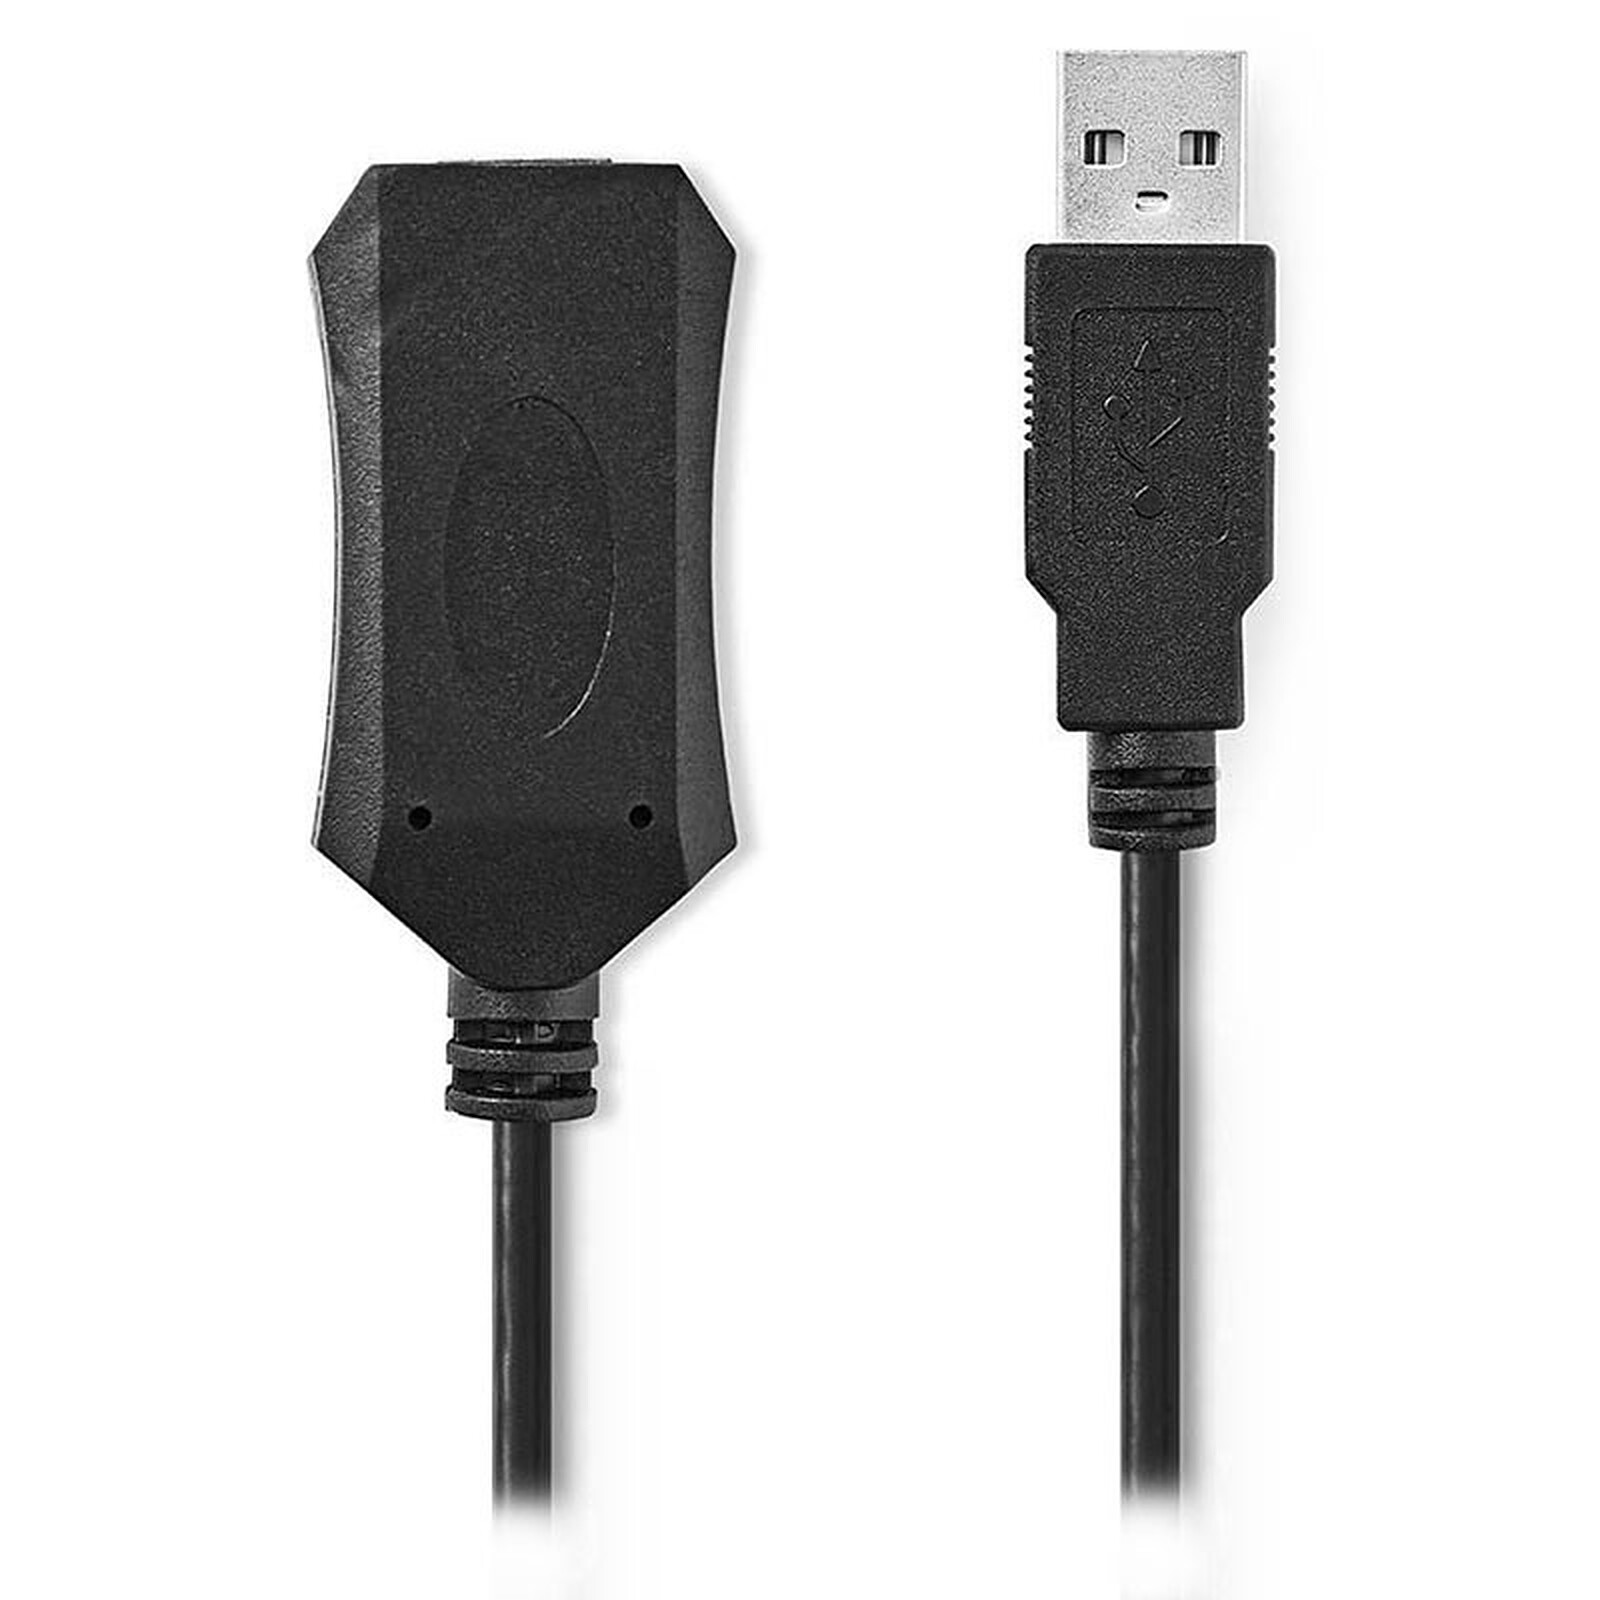 Rallonge USB amplifiée mâle / femelle (5 m)